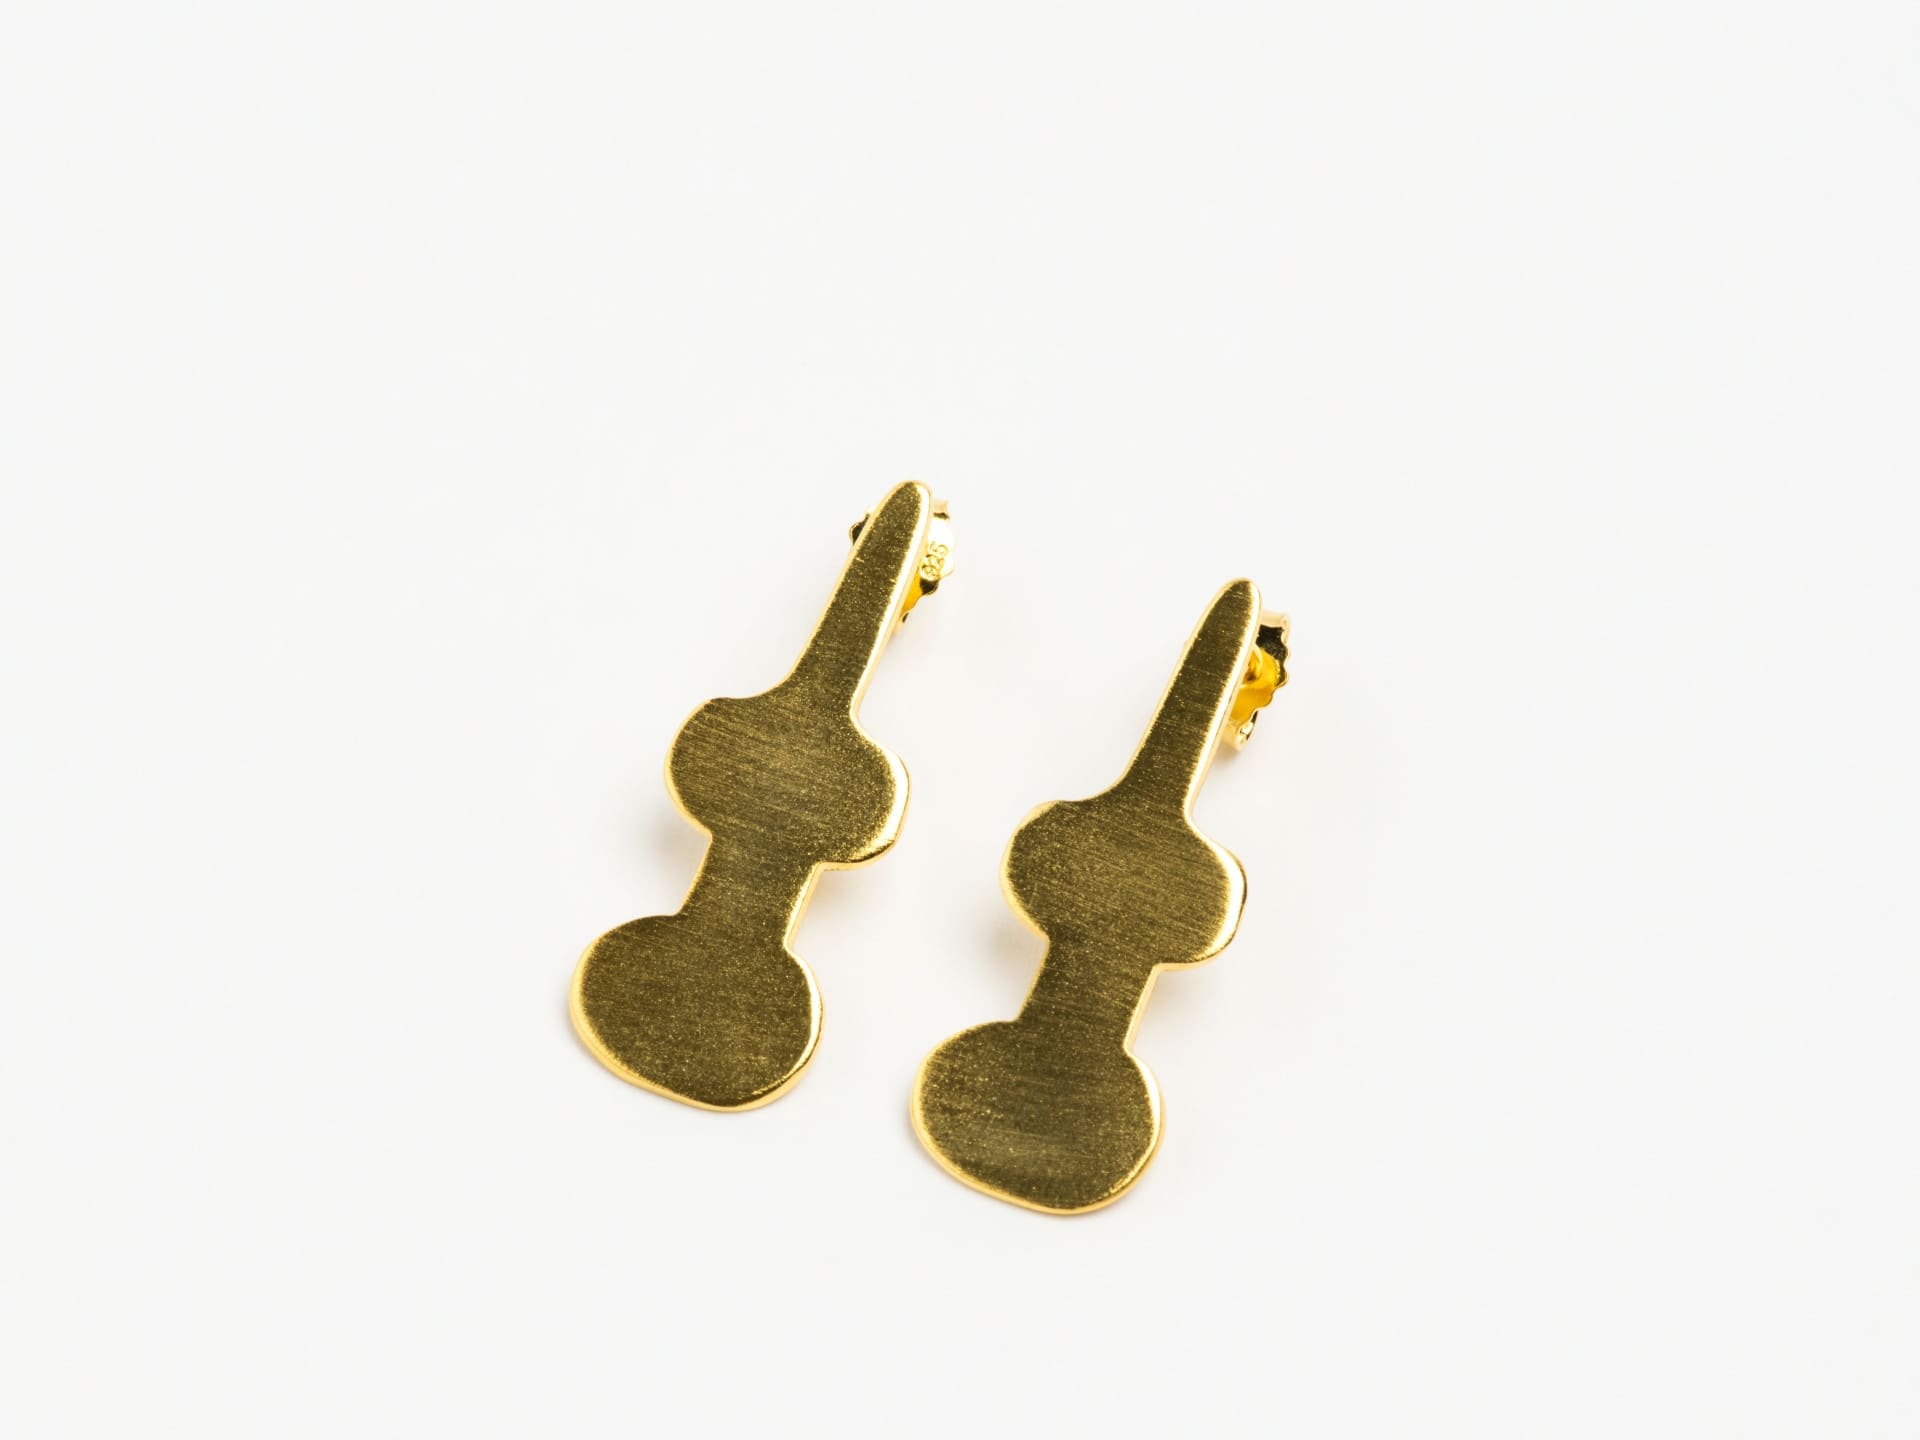 “Violin-shaped Figurine” Earrings